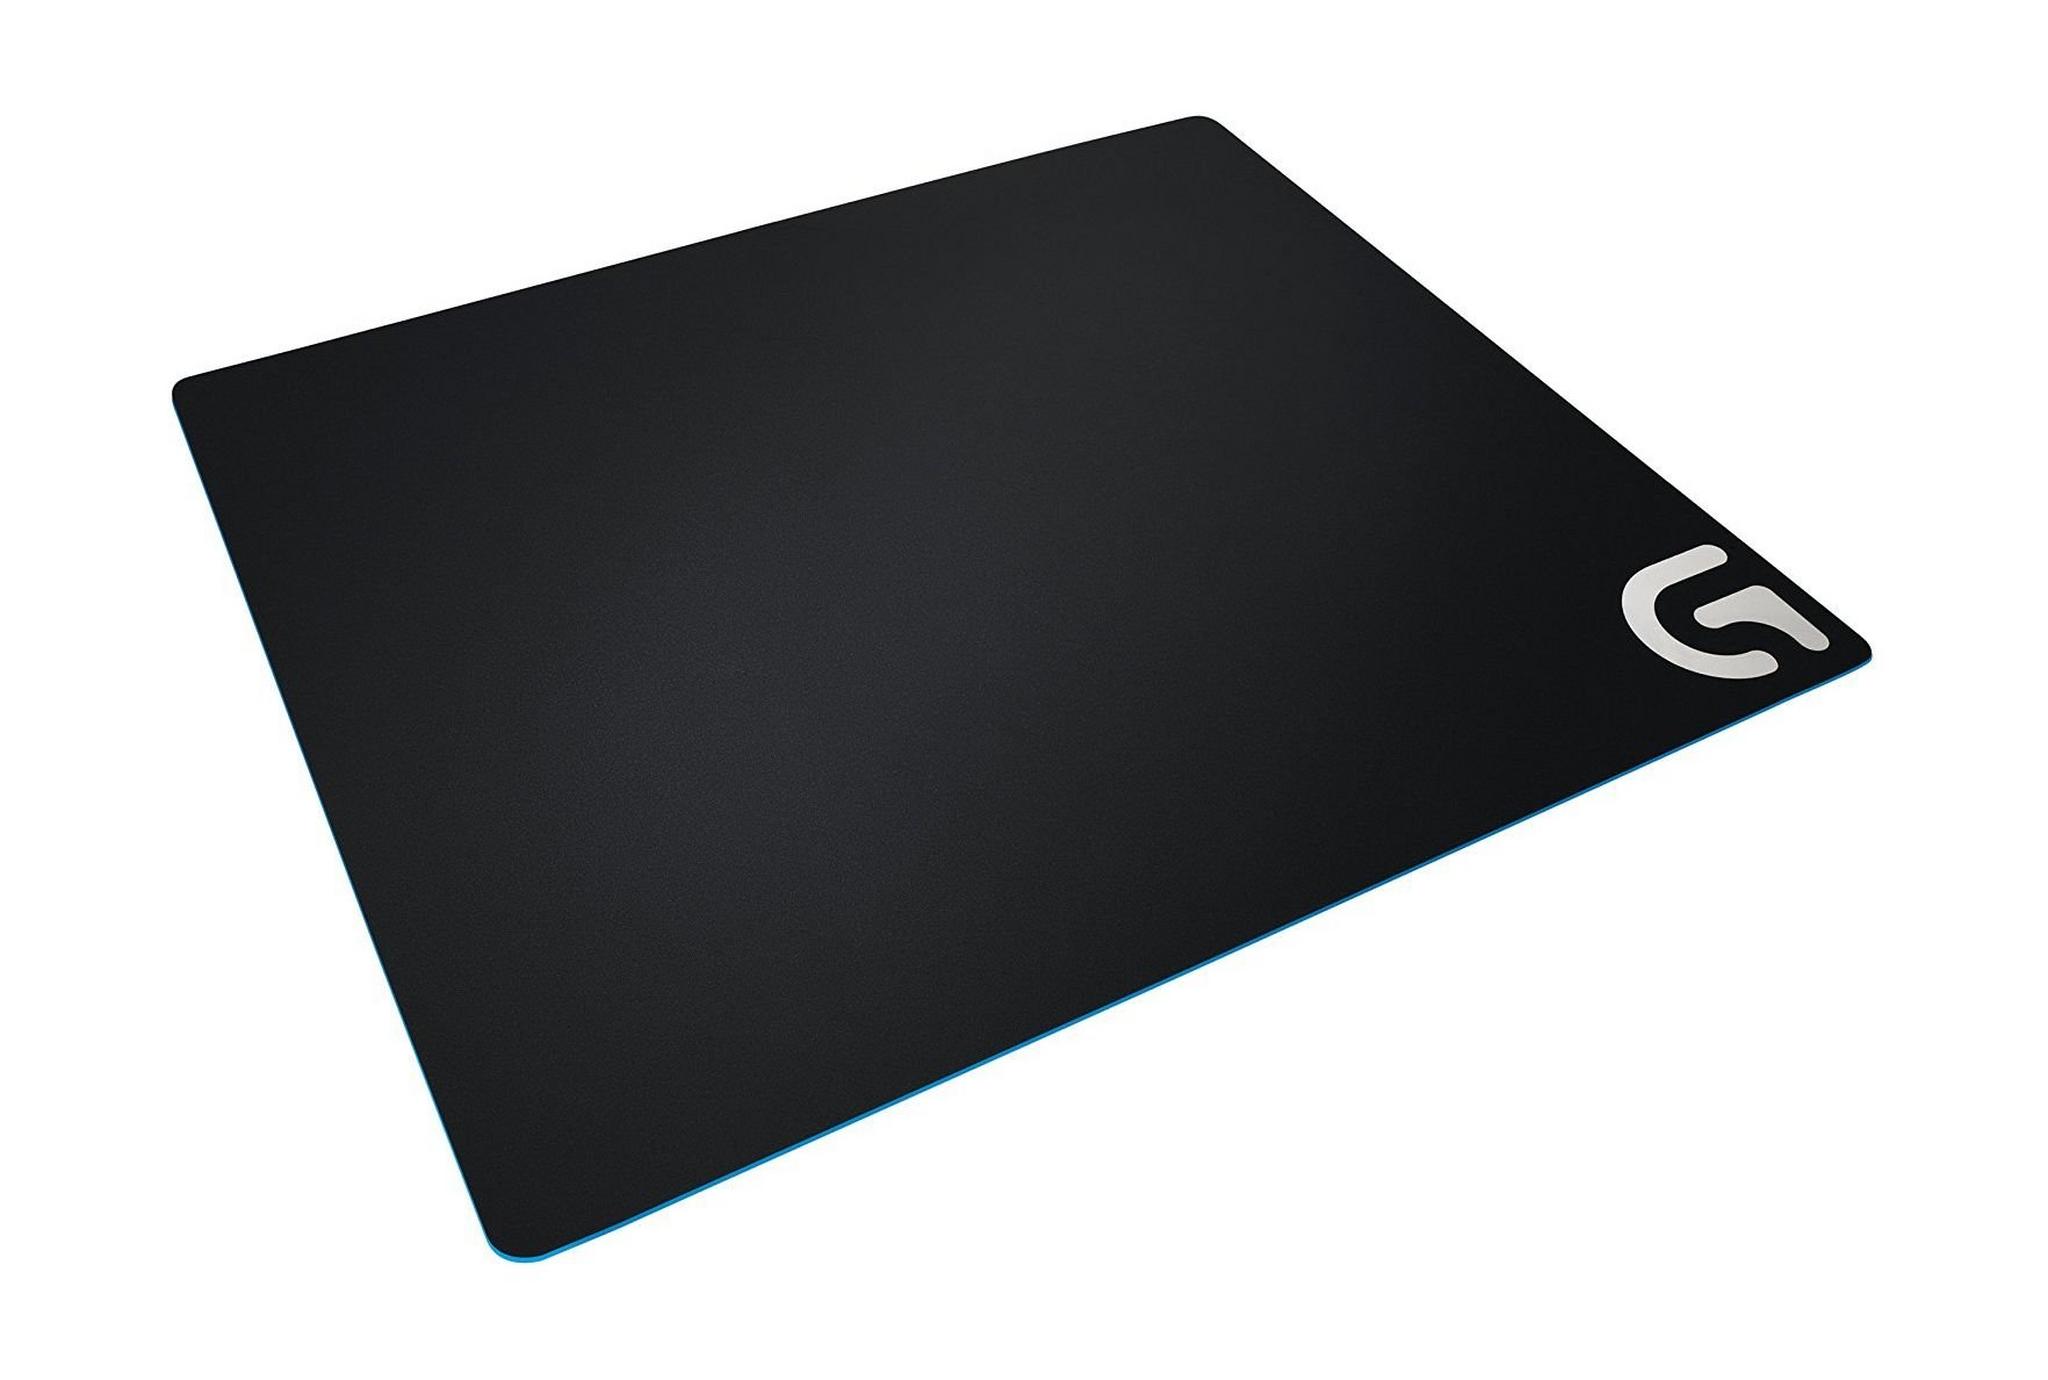 Logitech G640 Cloth Gaming Mouse Pad (943-000090) - Black